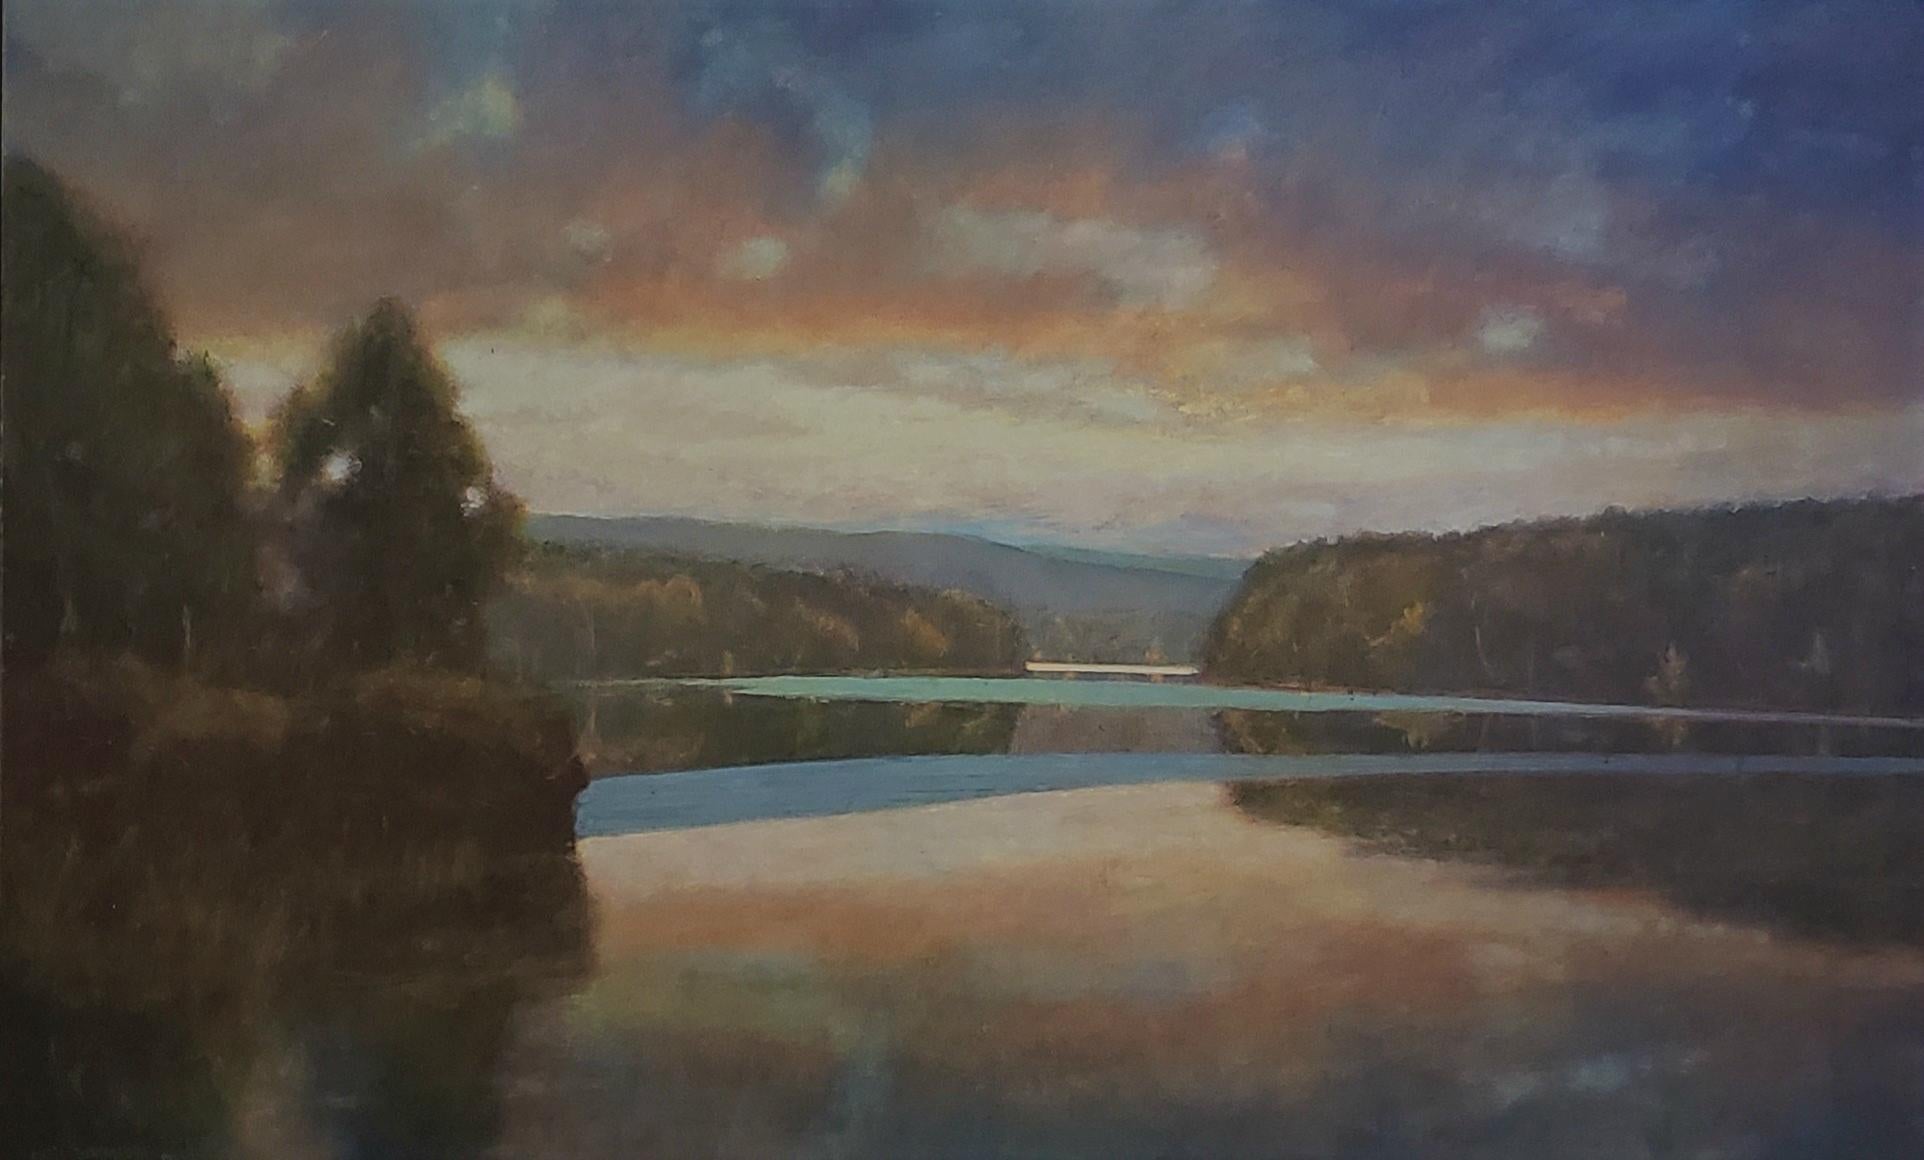 Chris Burkholder Landscape Painting - Spring Lake, American Luminism, Texas&Louisiana Landscapes, ethereal landscapes